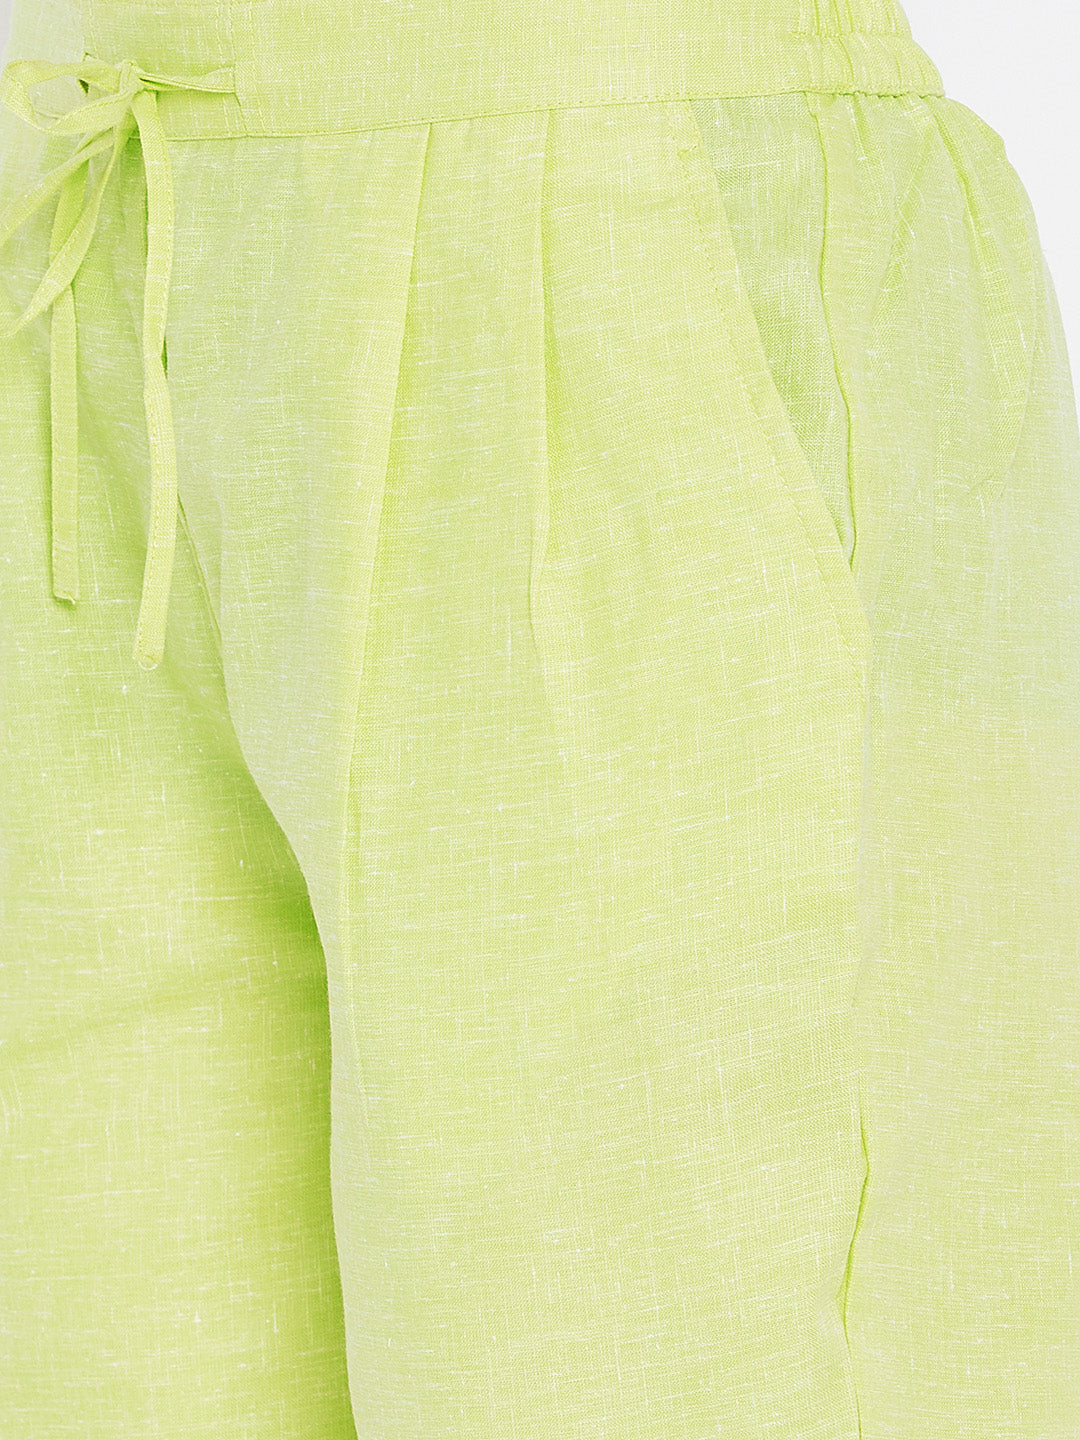 Straight Lime Green Trouser (Sku-BLMD1912).